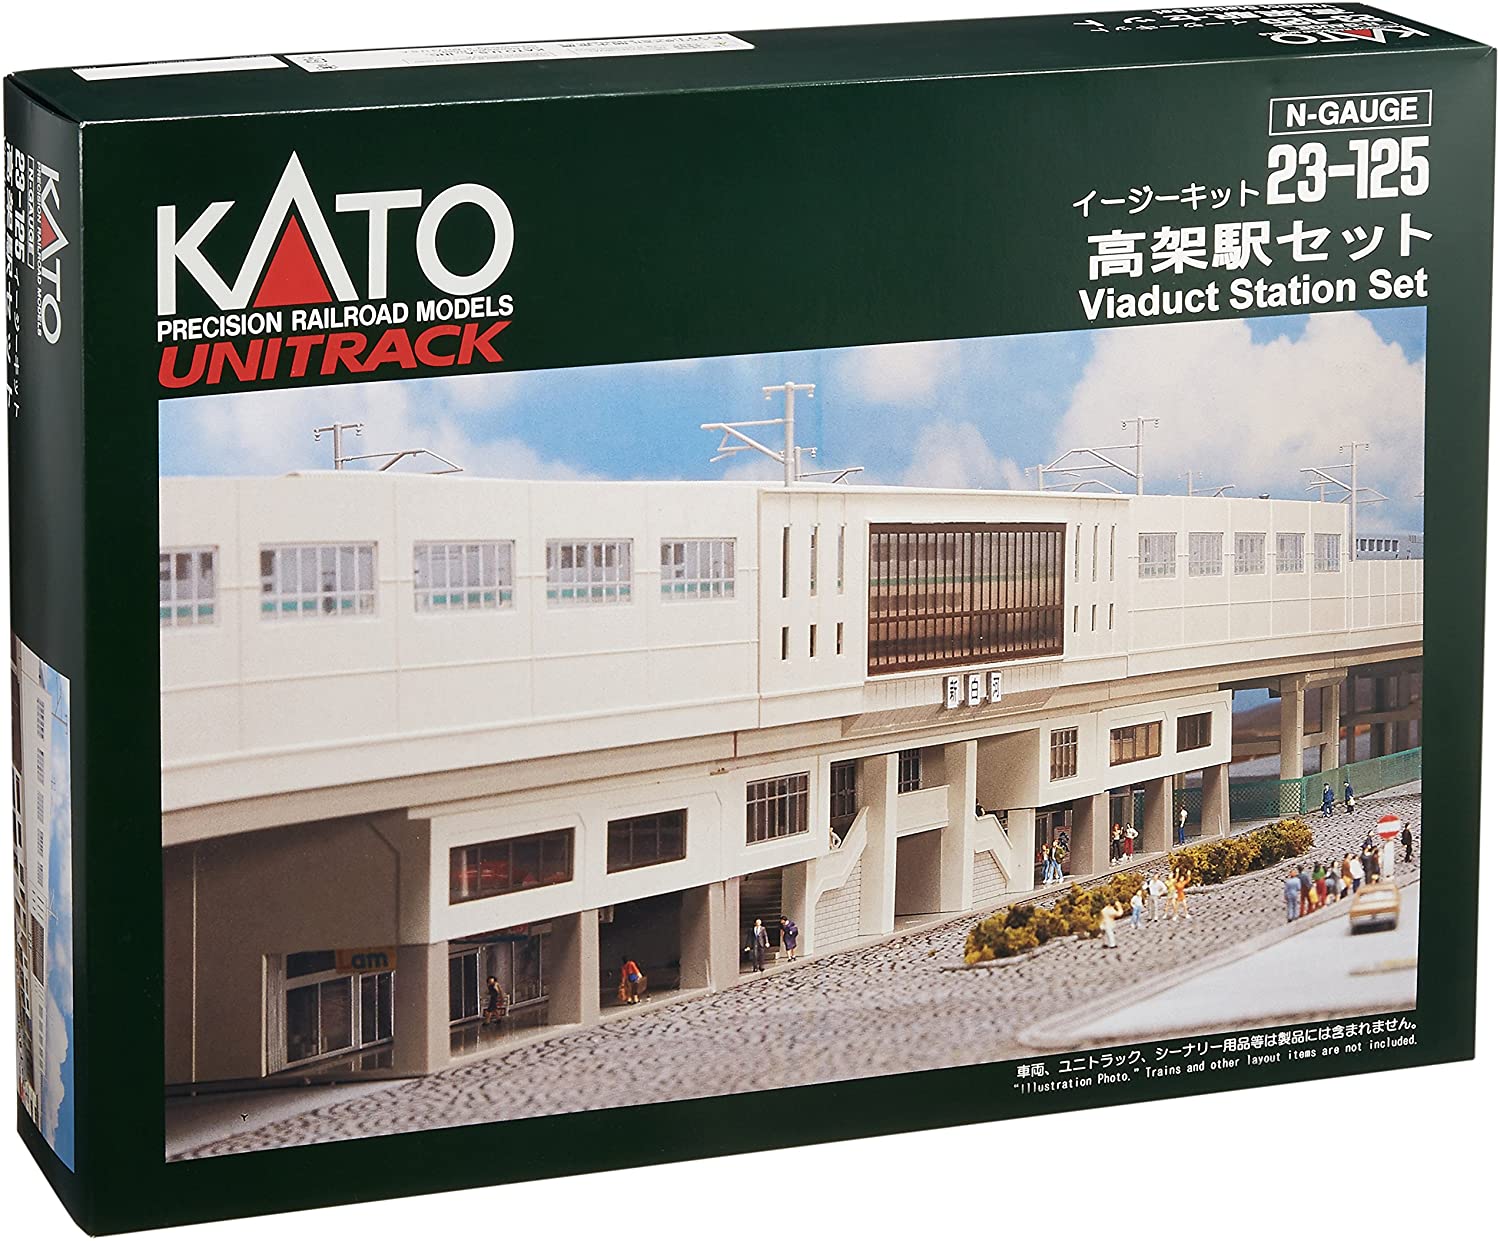 KATO Nゲージ 高架駅セット 23-125